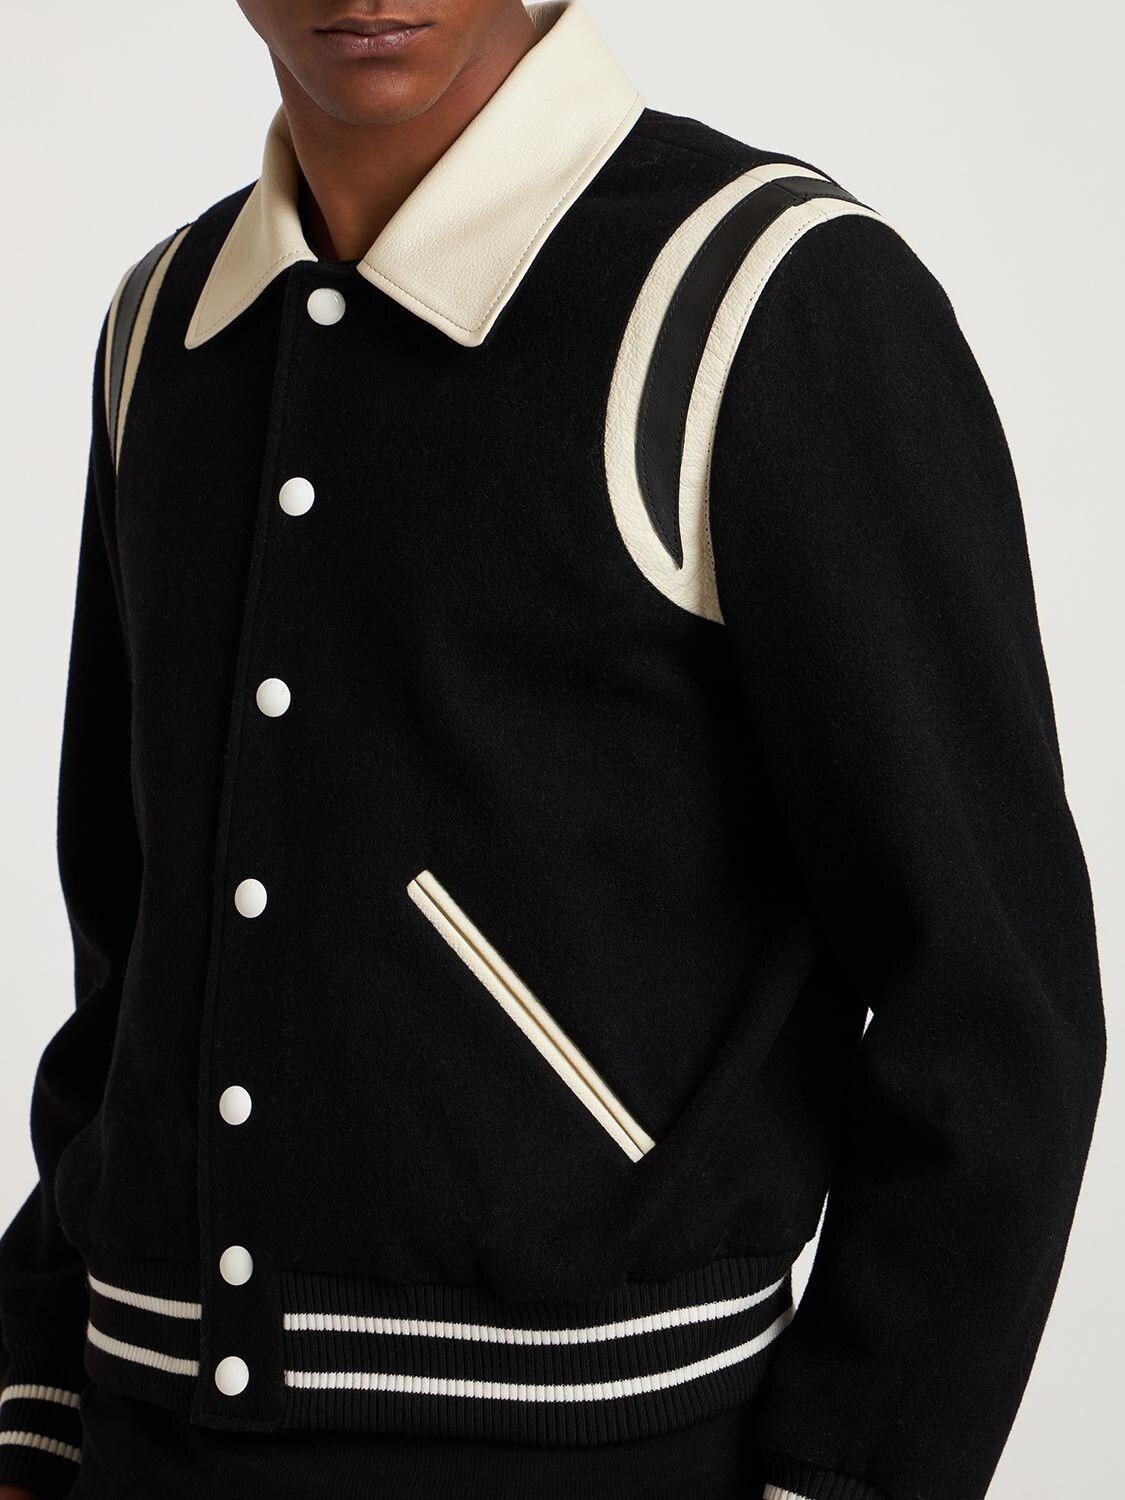 FLANEUR HOMME Wool Blend Teddy Jacket in Black for Men | Lyst UK